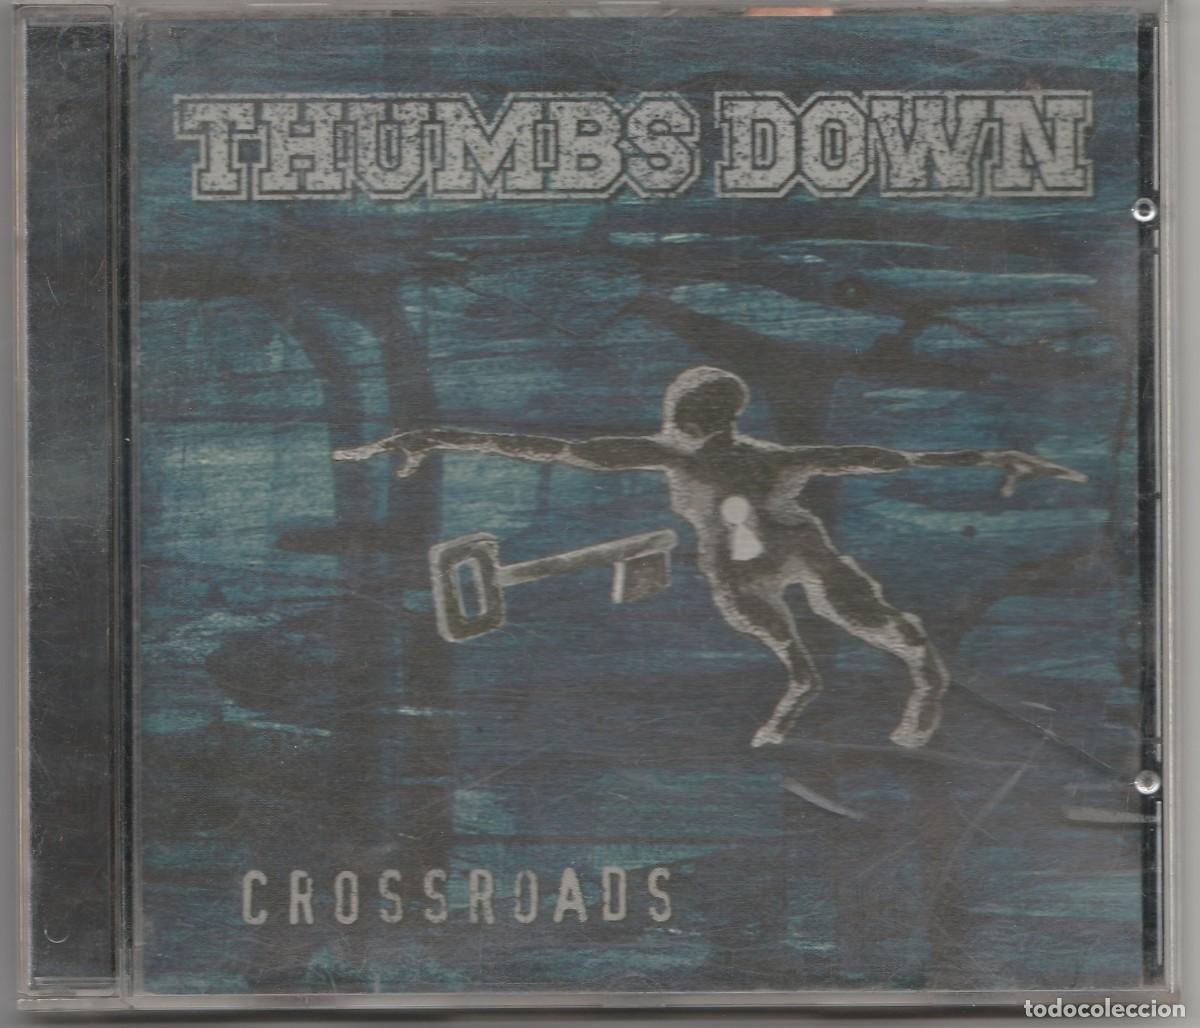 CD THUMBS DOWN - CROSSROADS - HARDCORE PUNK